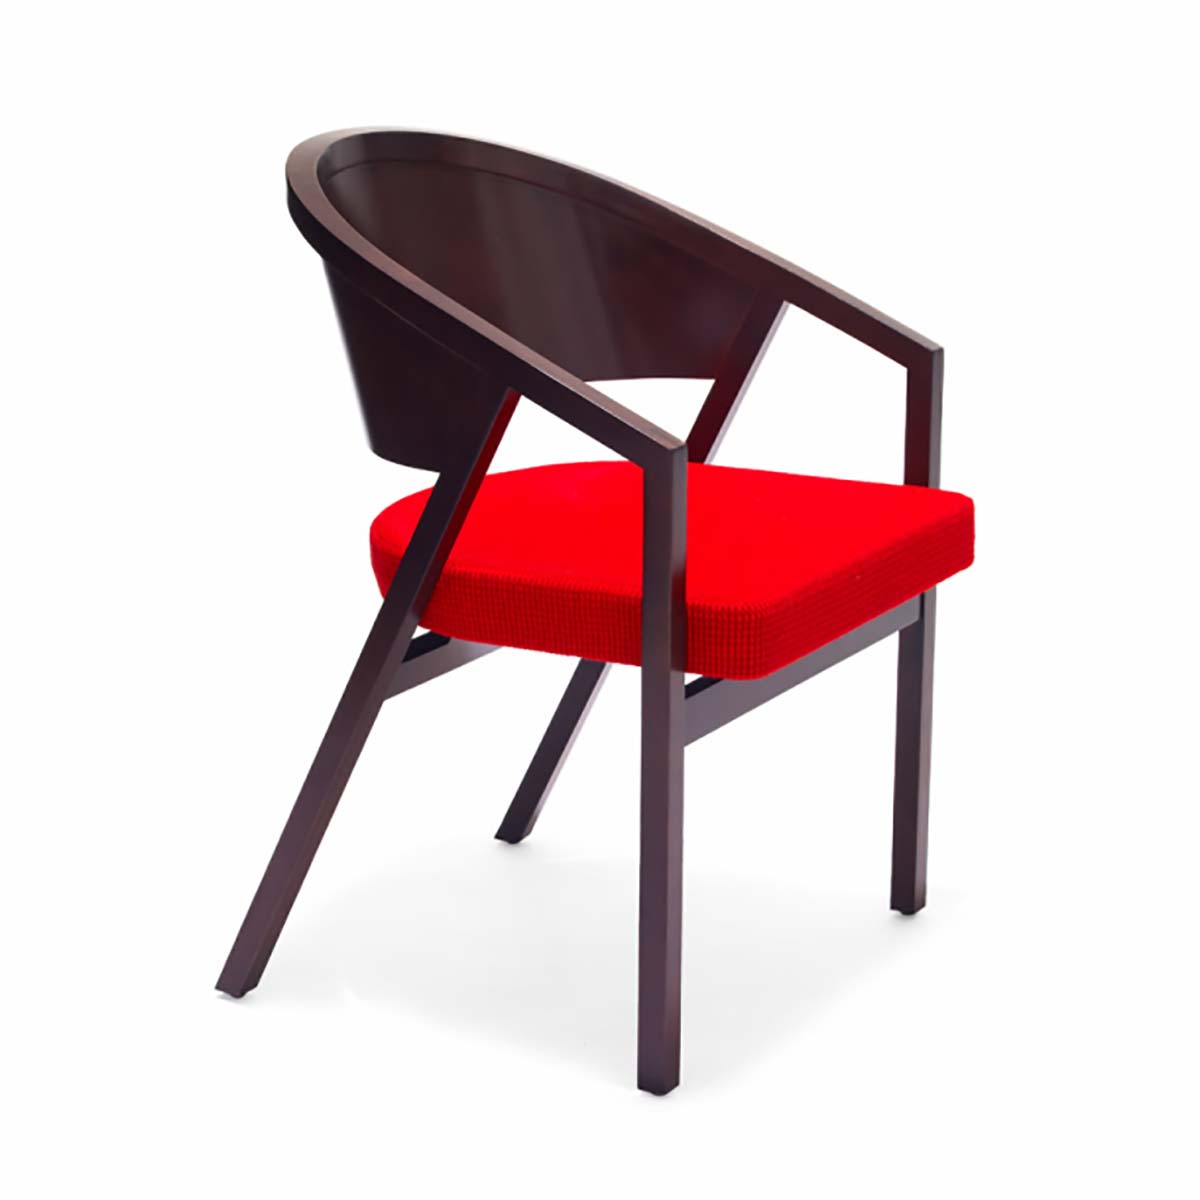 Shelton Mindel Side Chair Trax Furniture Millerknoll